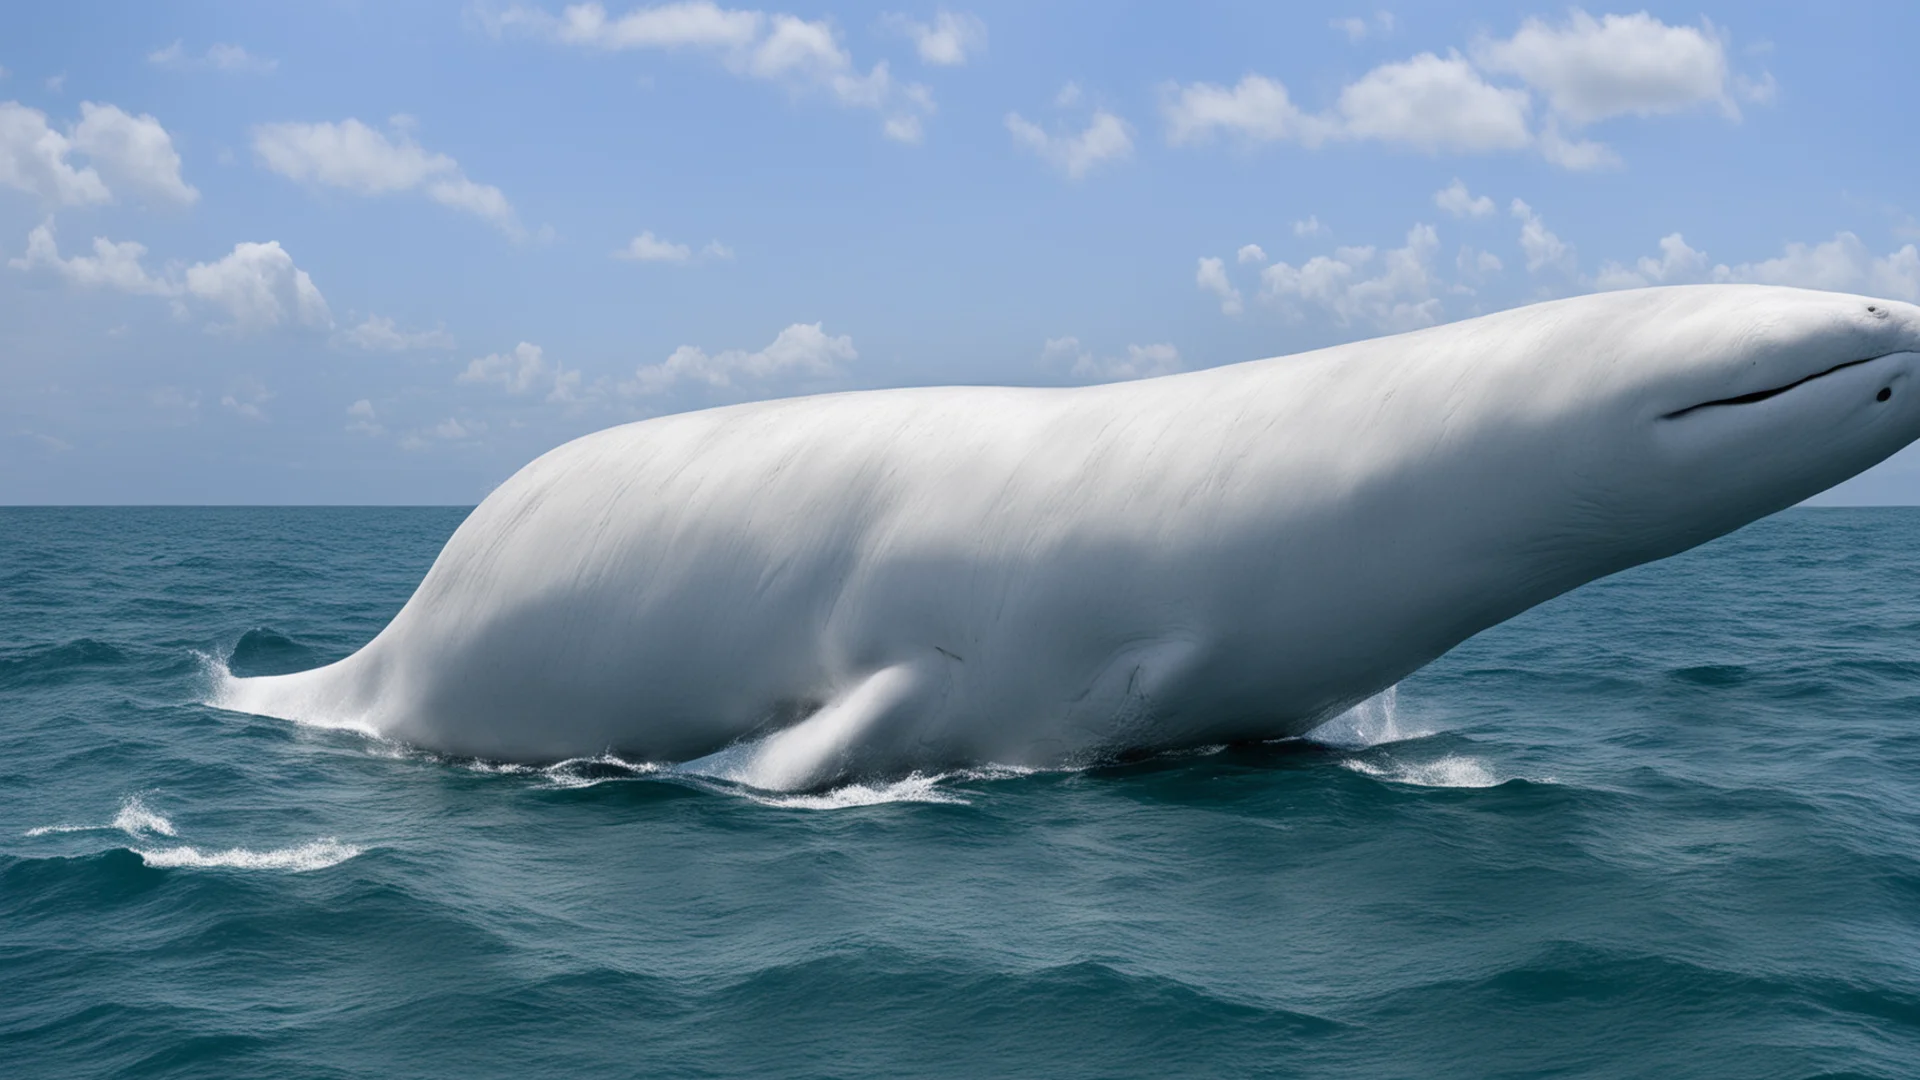 a very big white sperm whale in the ocean  alongside a boat wide